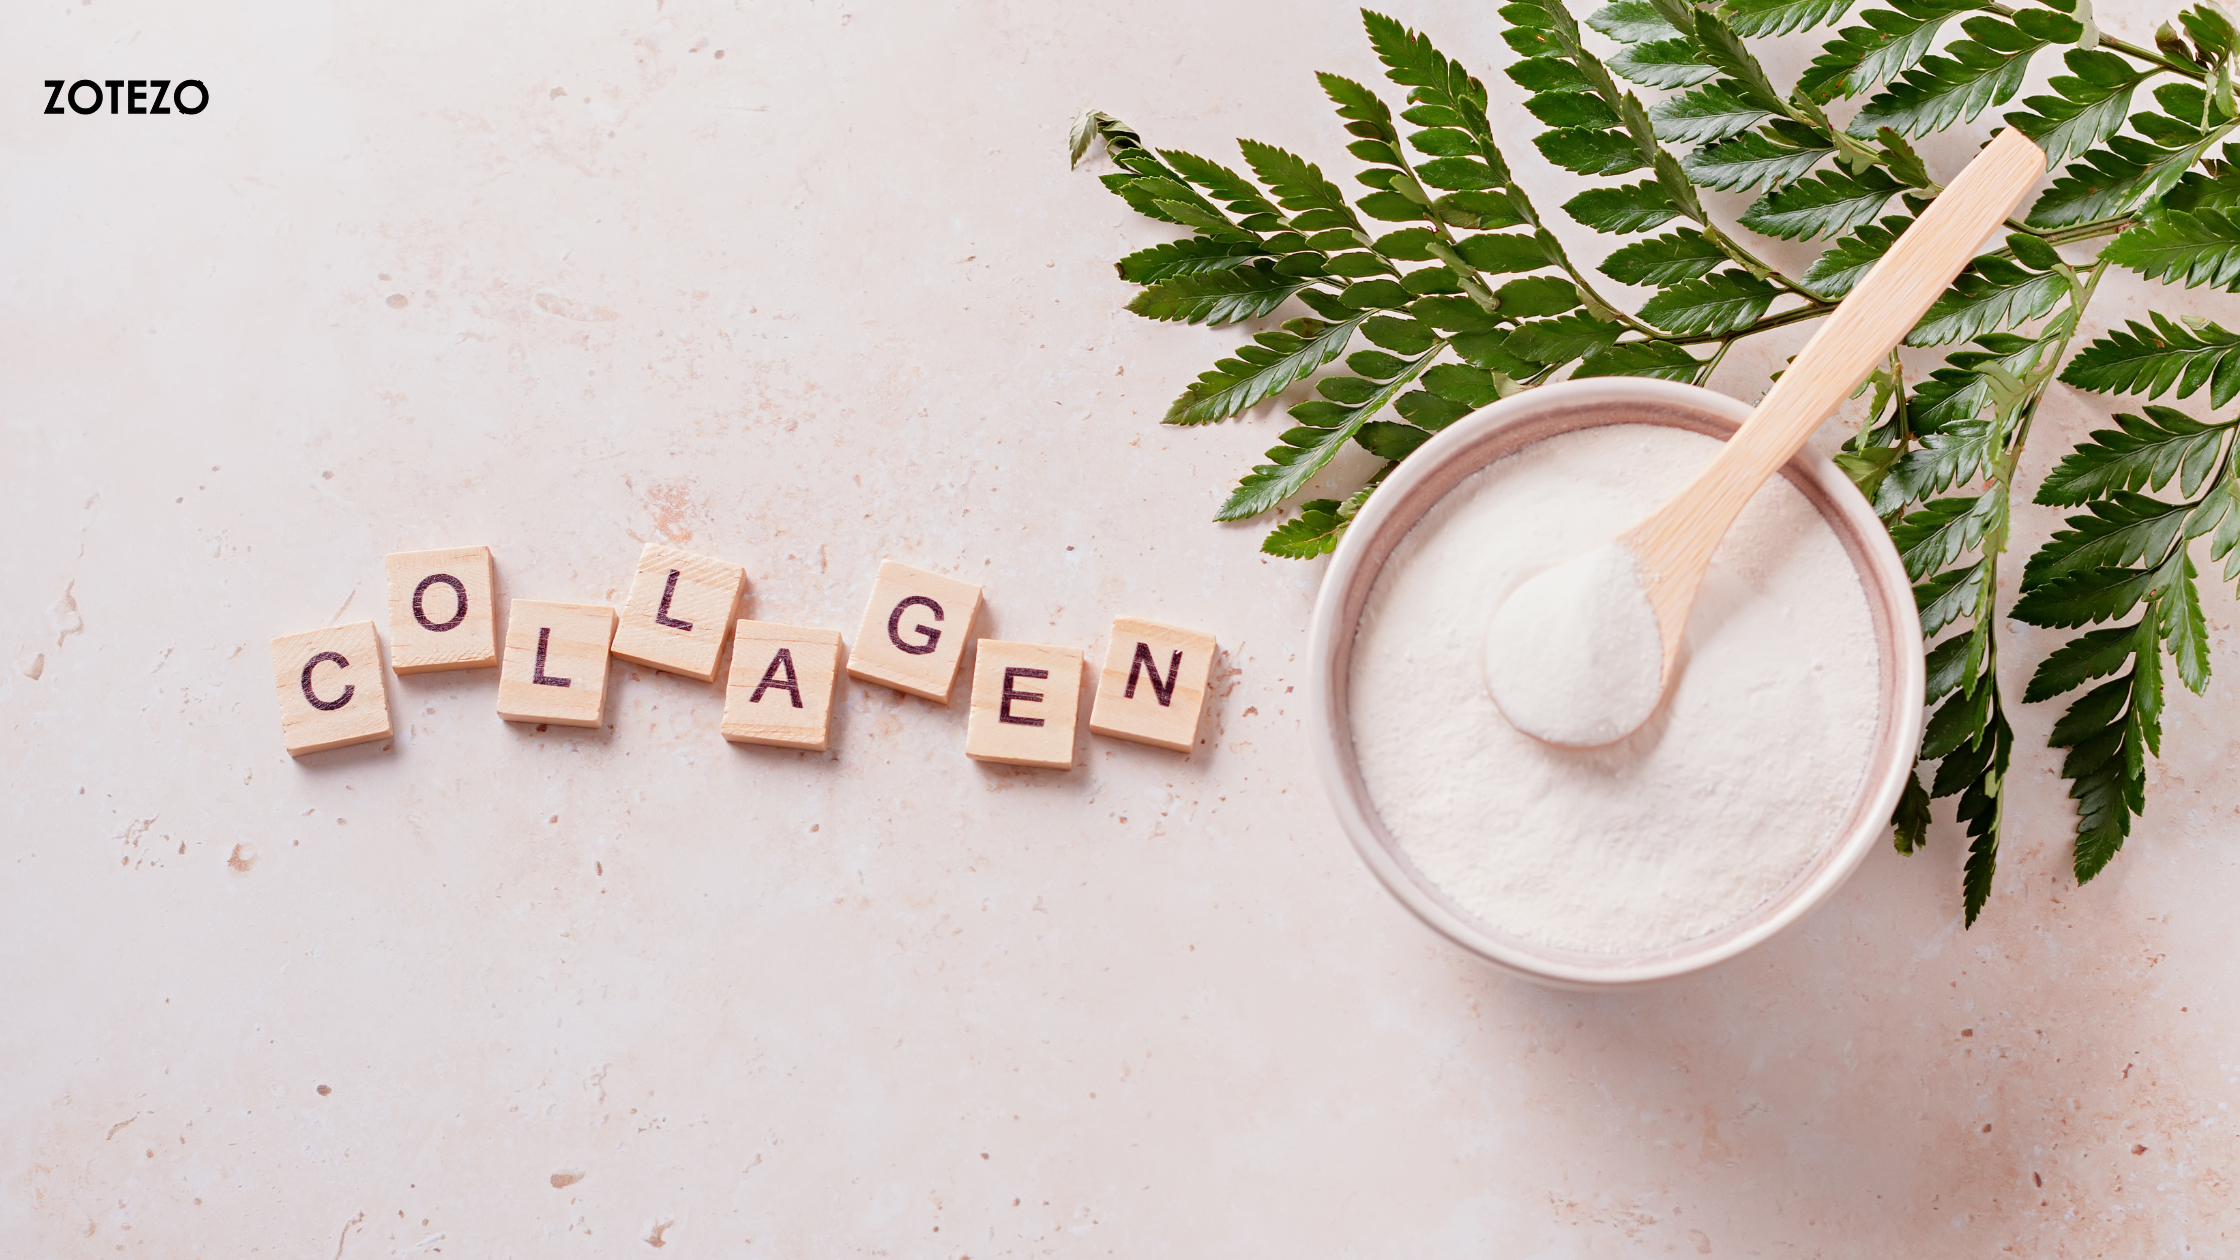 Collagen Supplements in Sweden